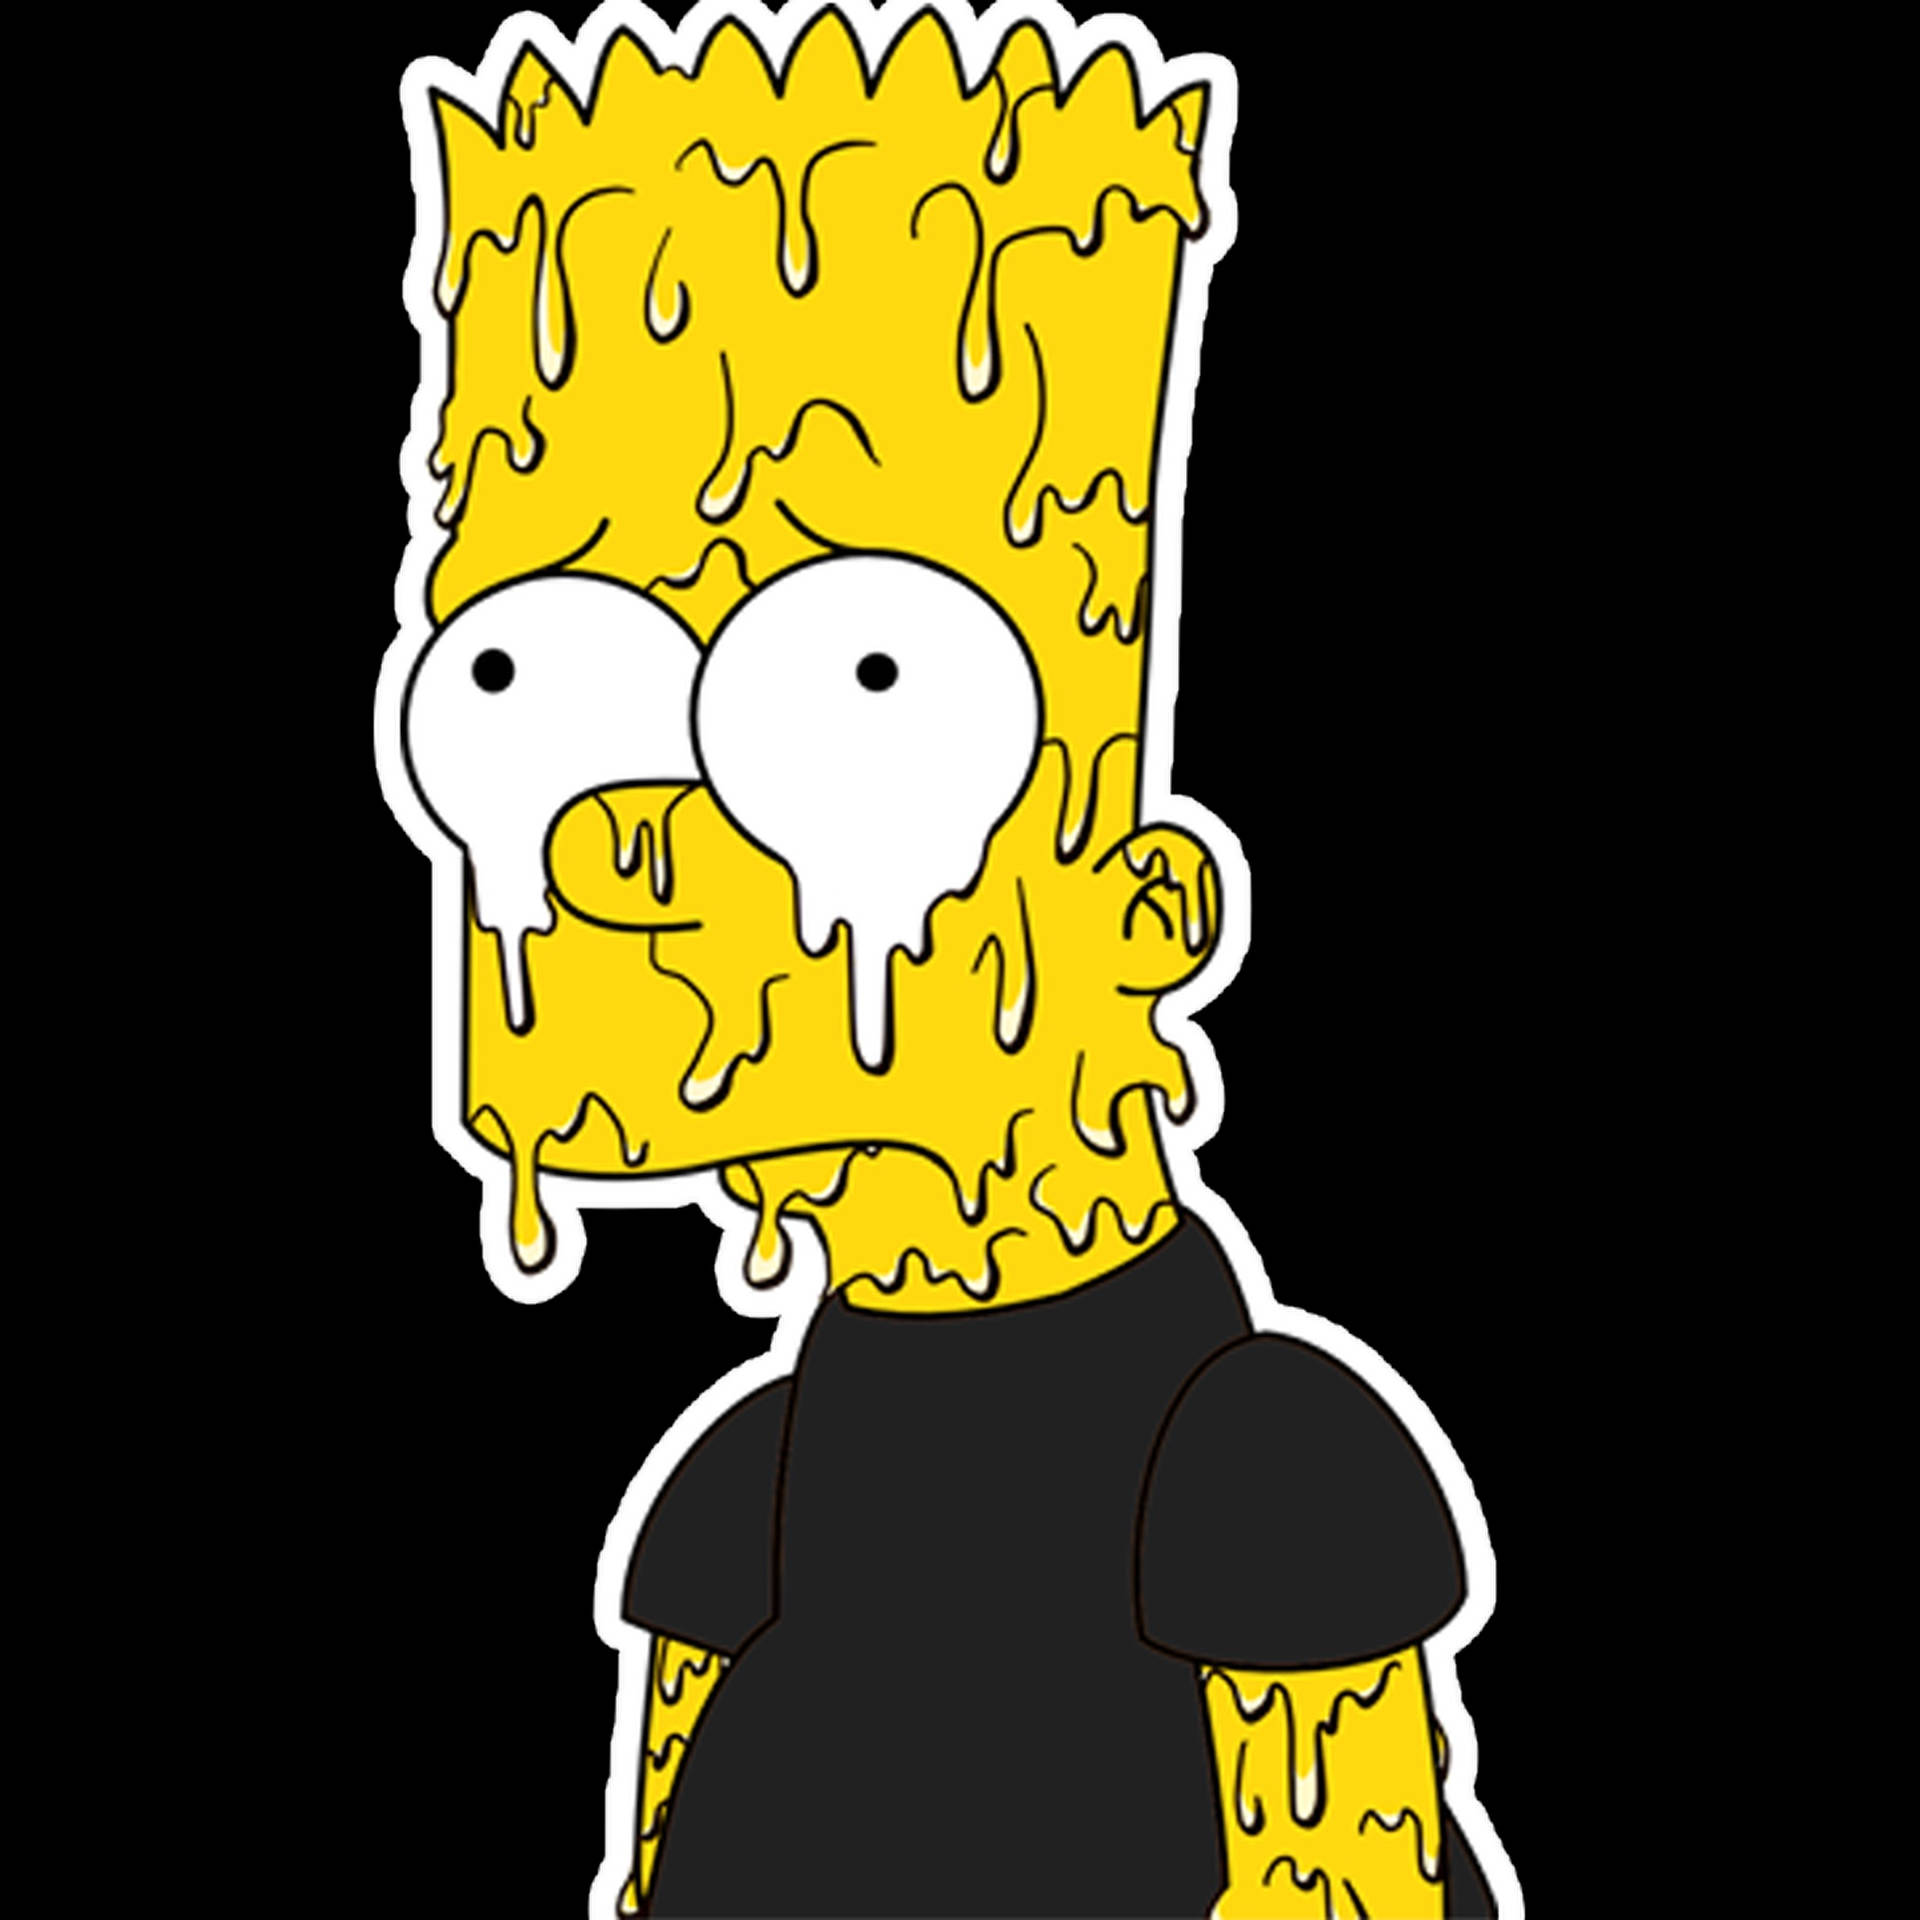 Free Bart Simpson Sad Wallpaper Downloads, Bart Simpson Sad Wallpaper for FREE